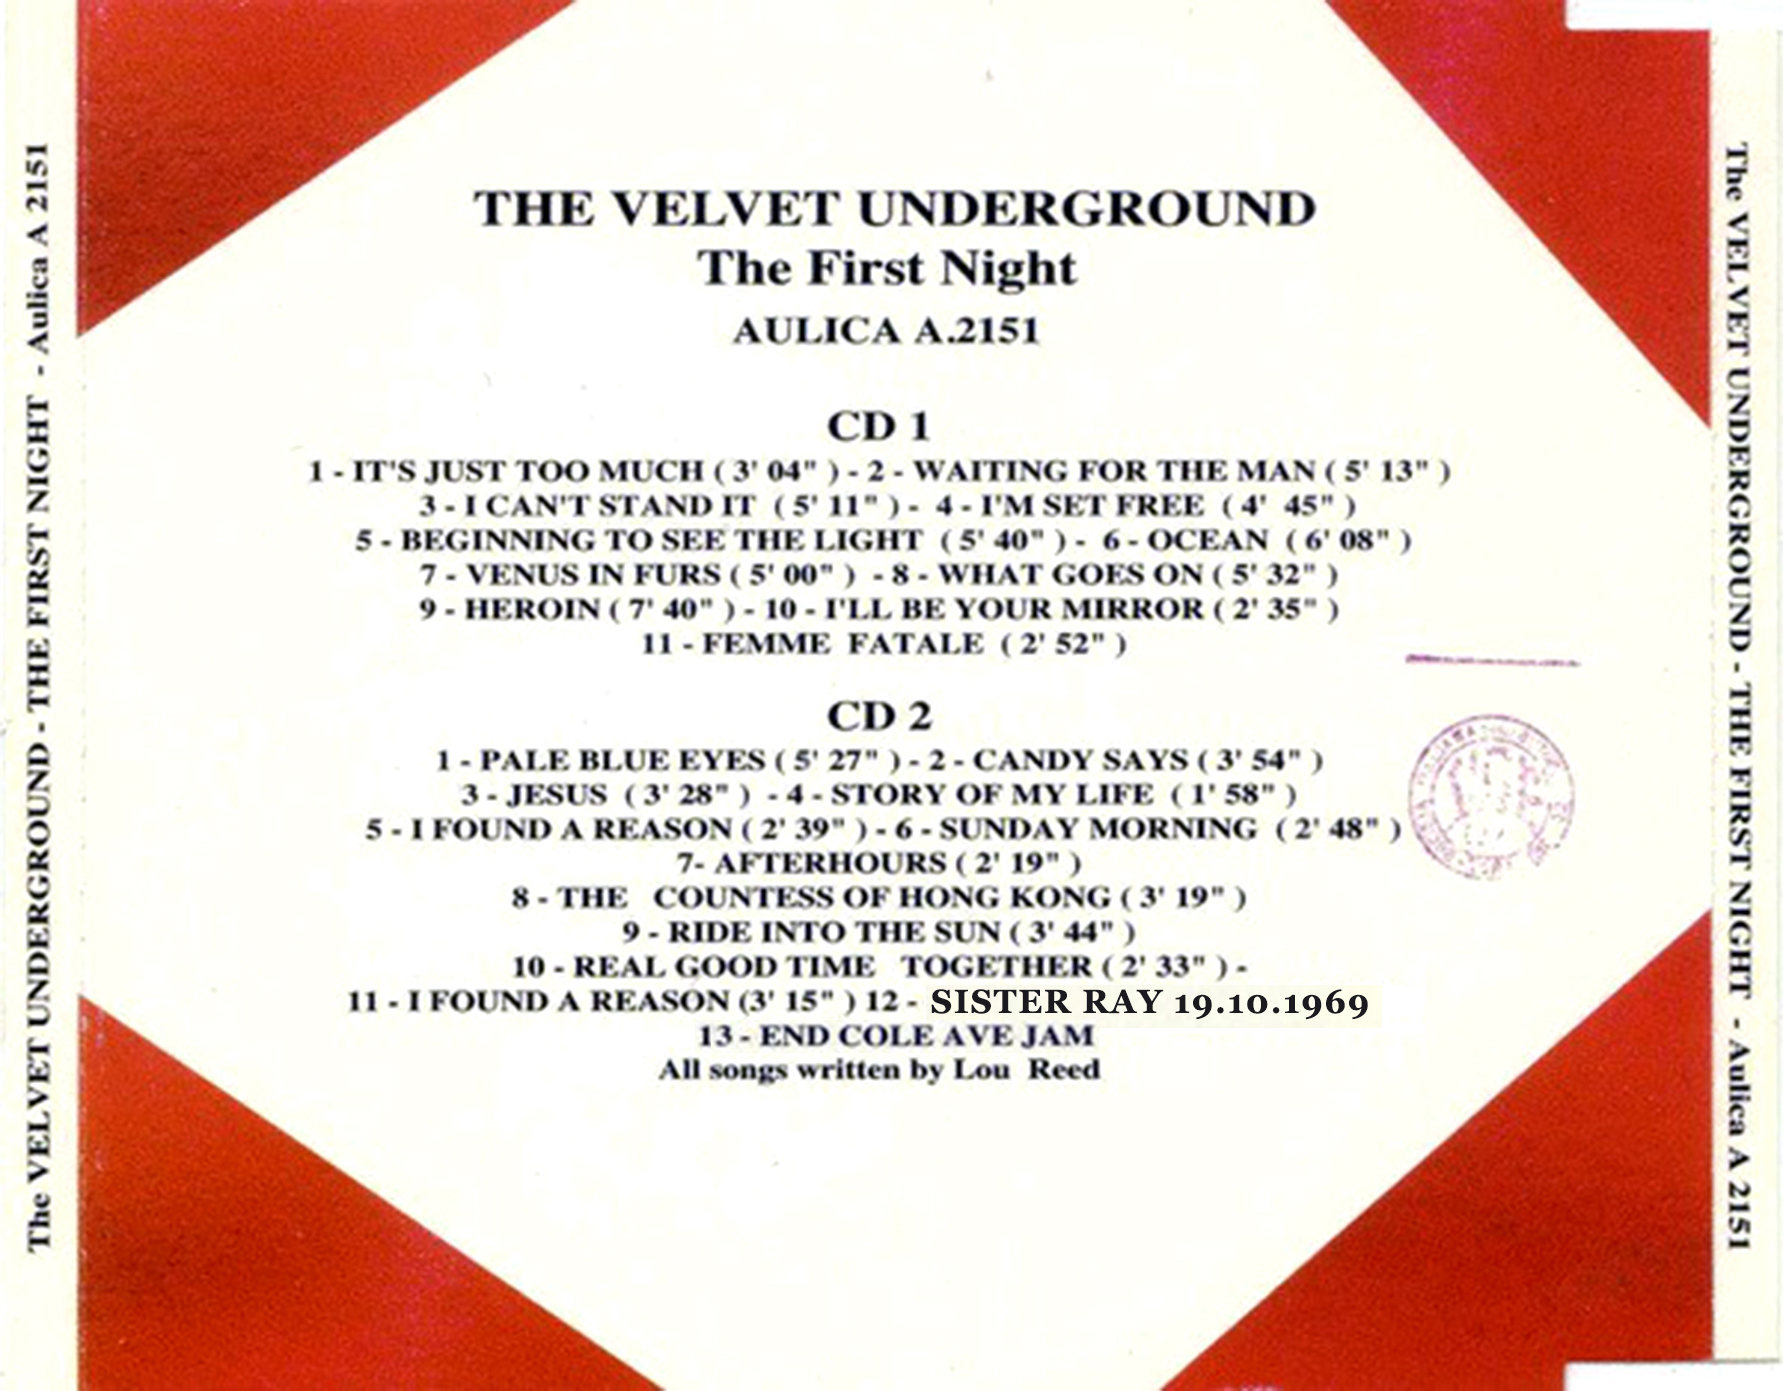 VelvetUnderground1993AulicaItaly (1).jpg